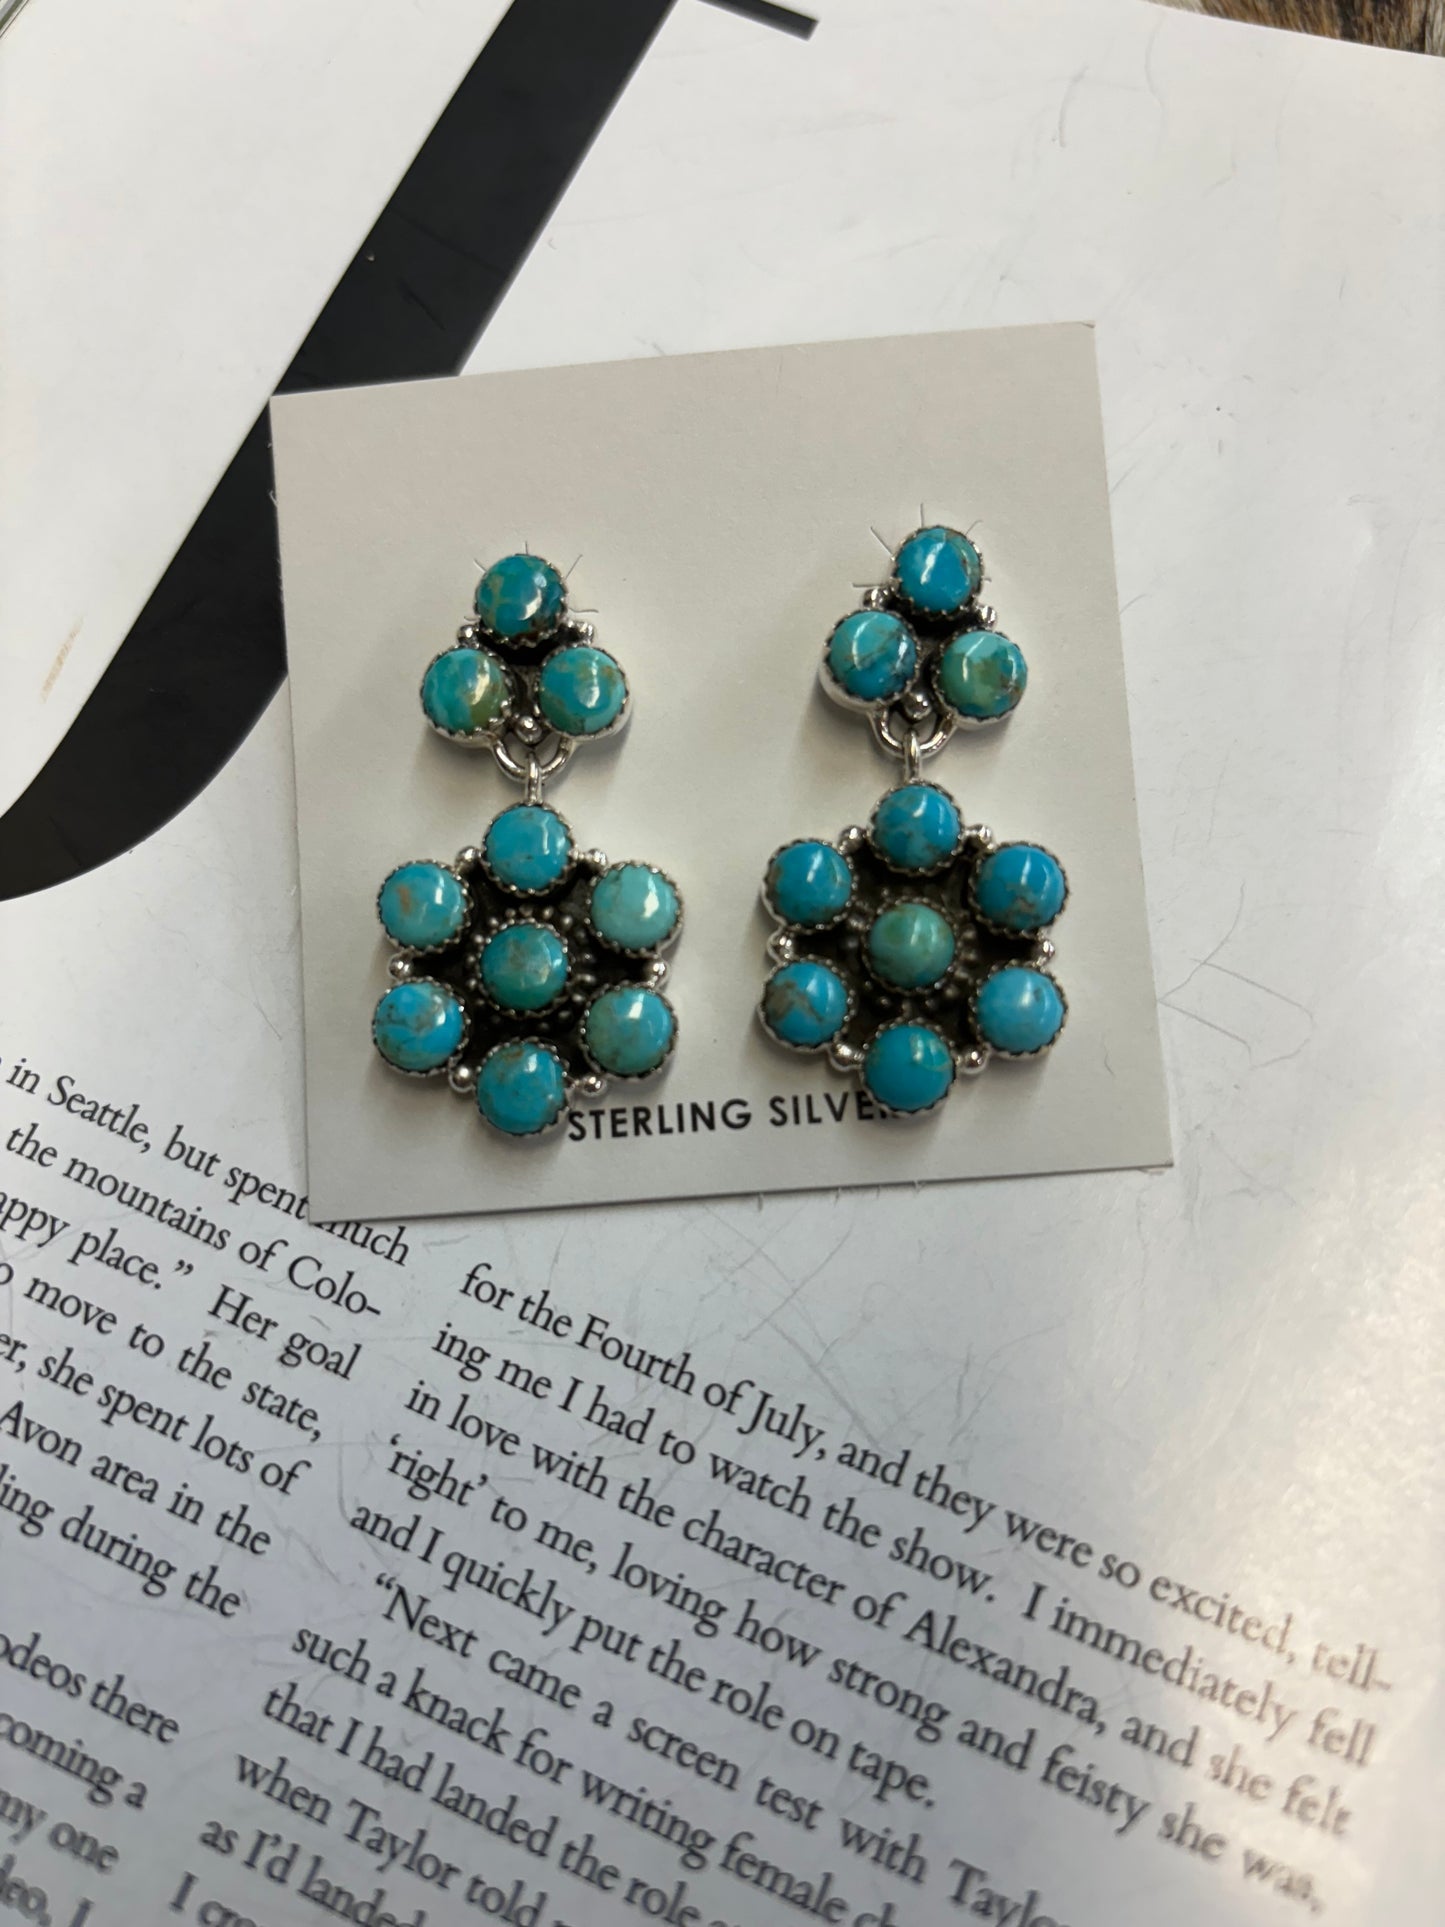 The Hank Kingman Turquoise Cluster Earrings